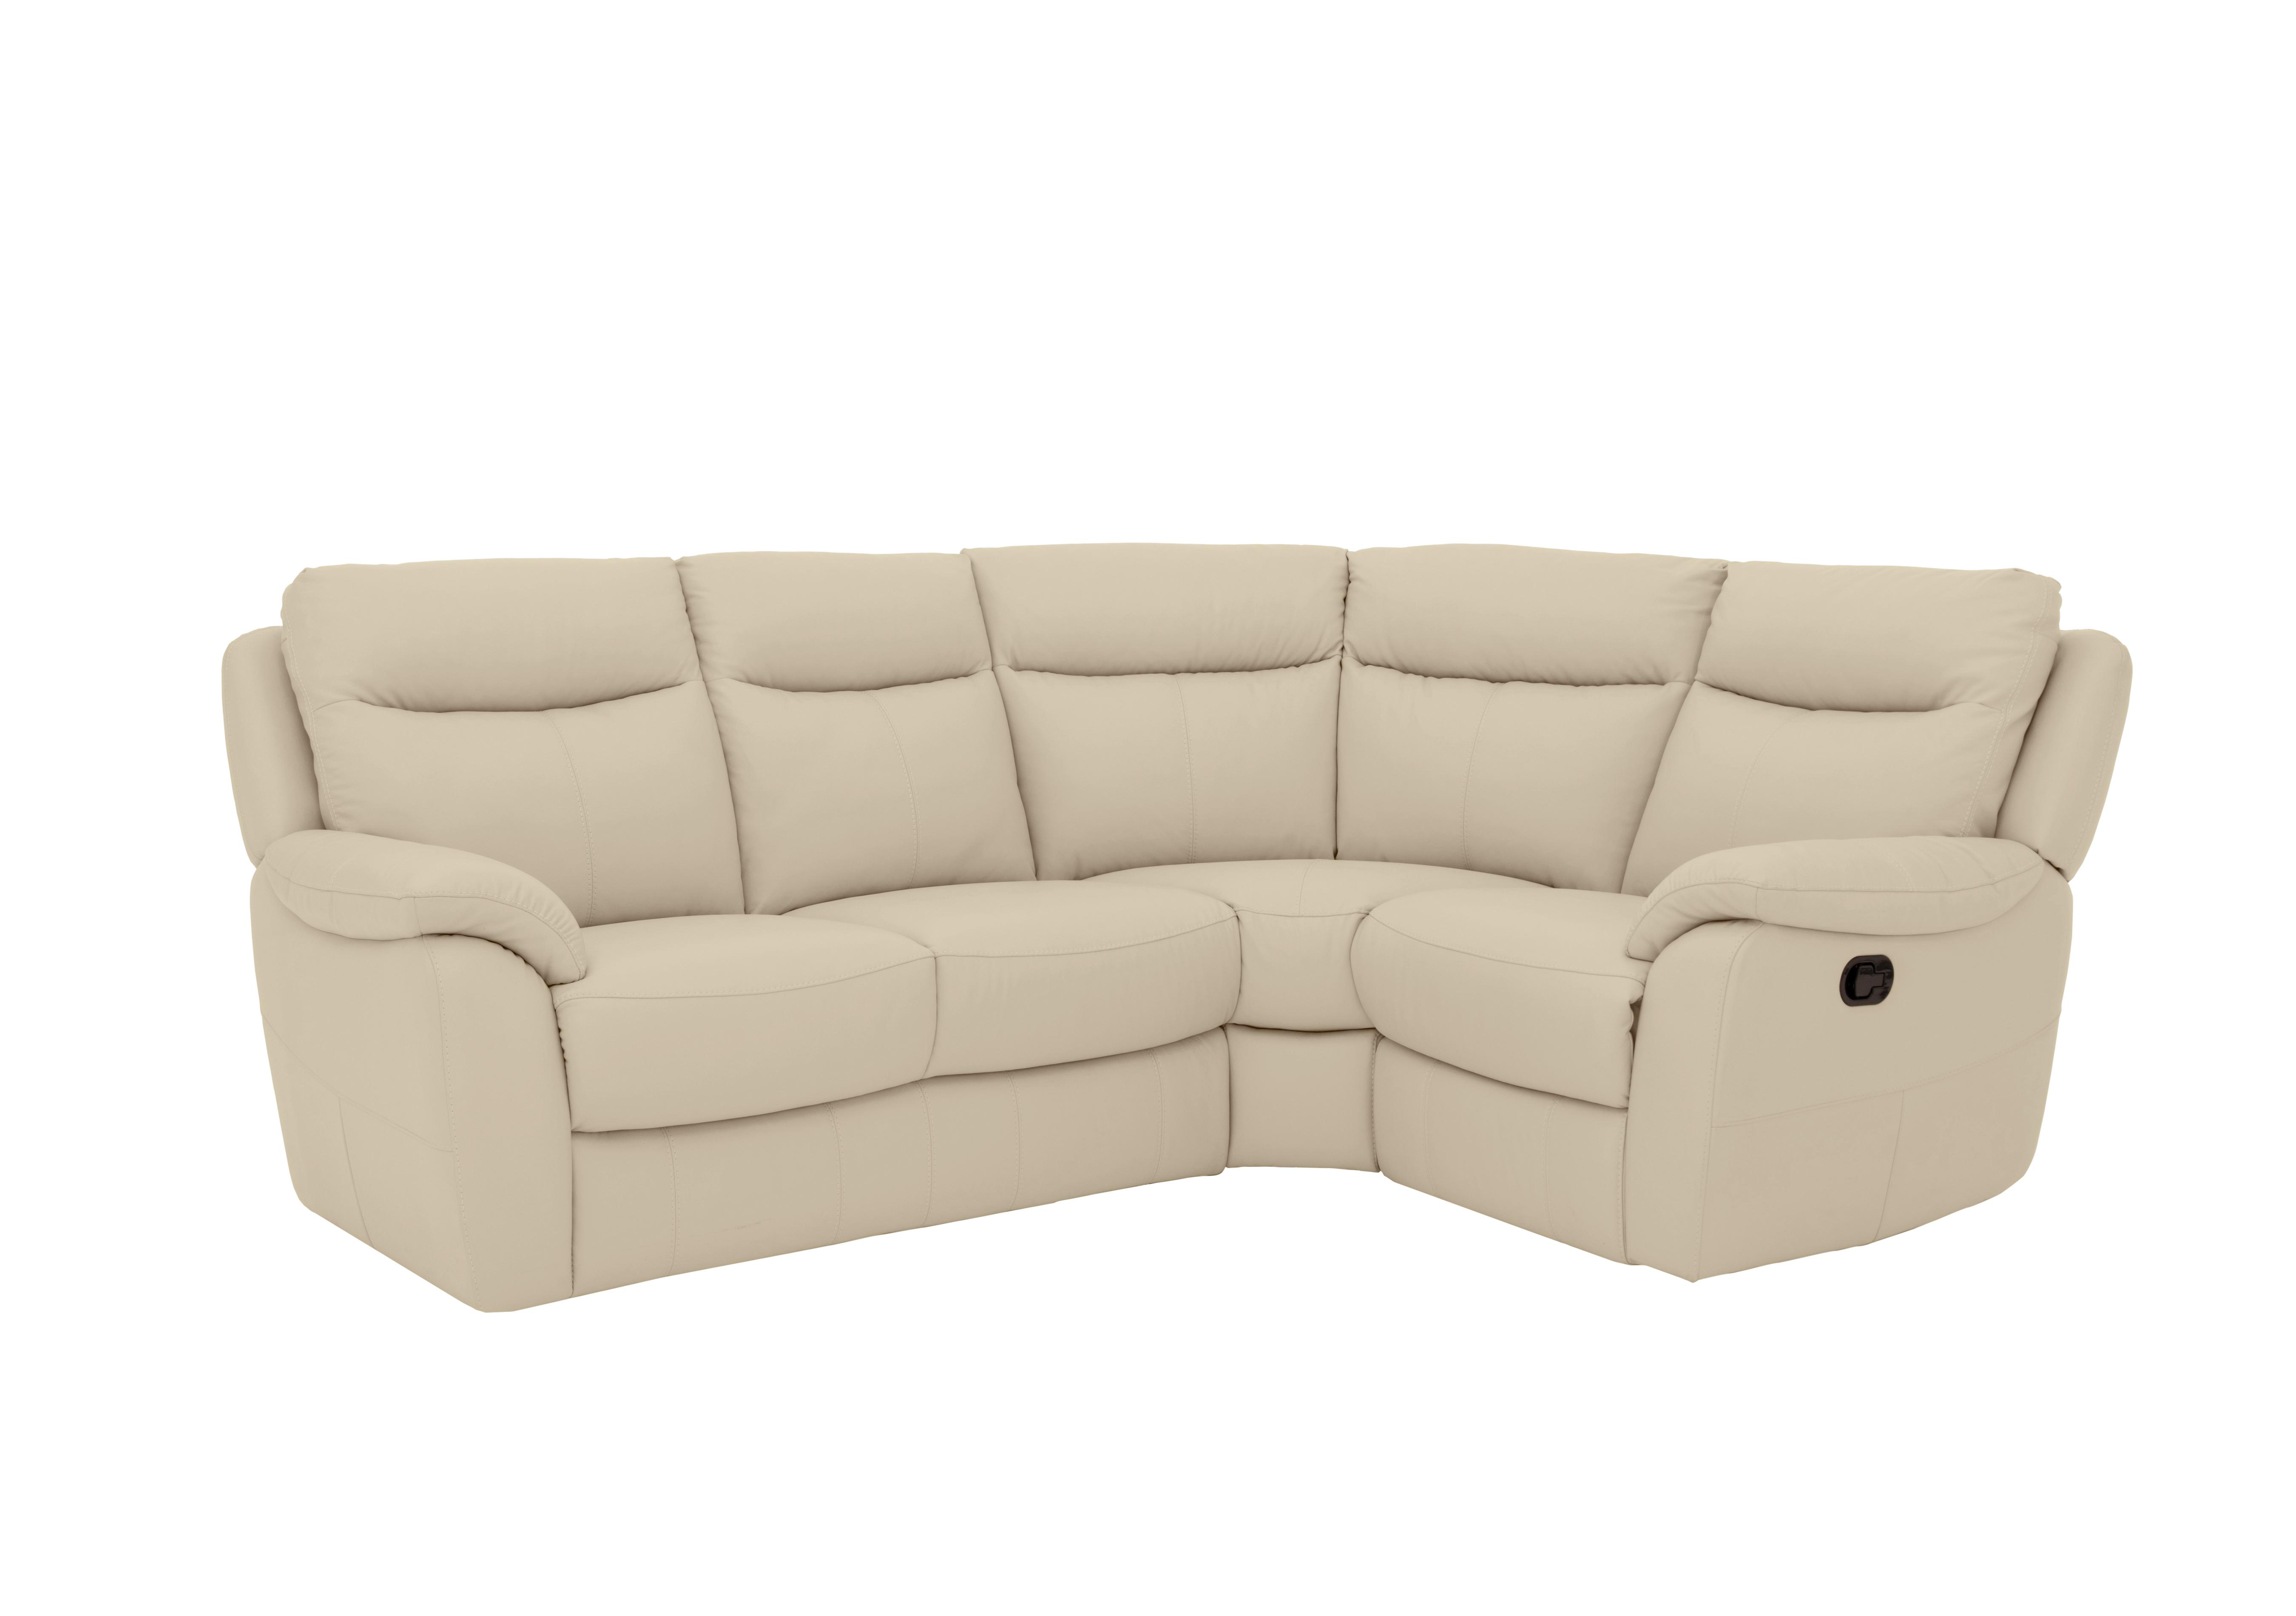 Snug Compact Leather Corner Sofa in Bv-862c Bisque on Furniture Village